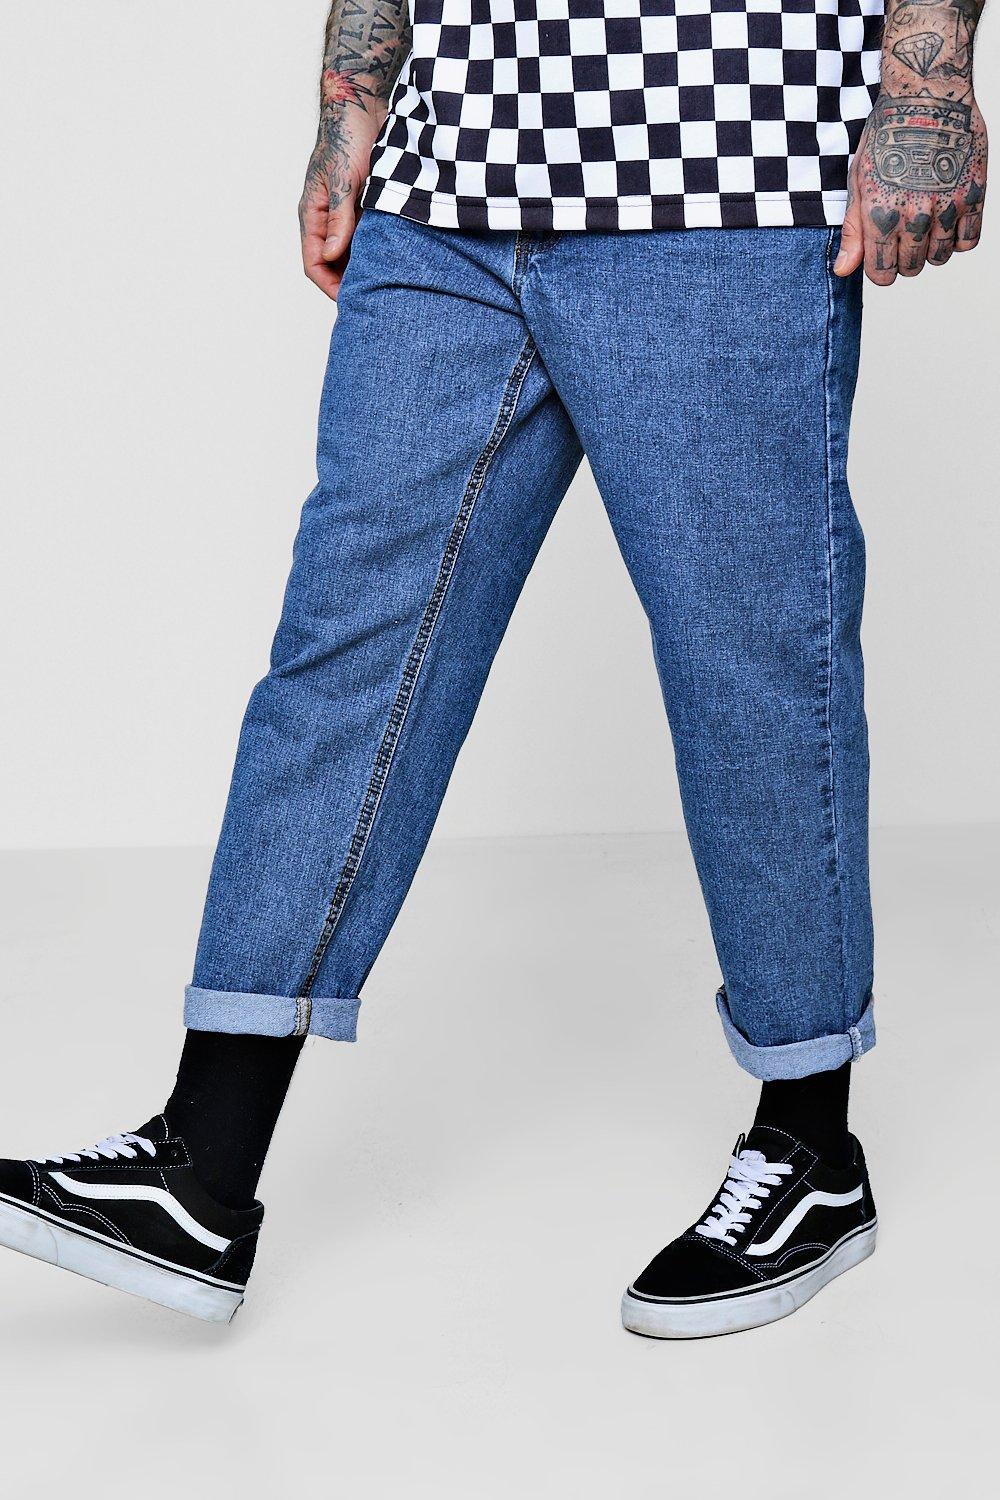 baggy skater jeans